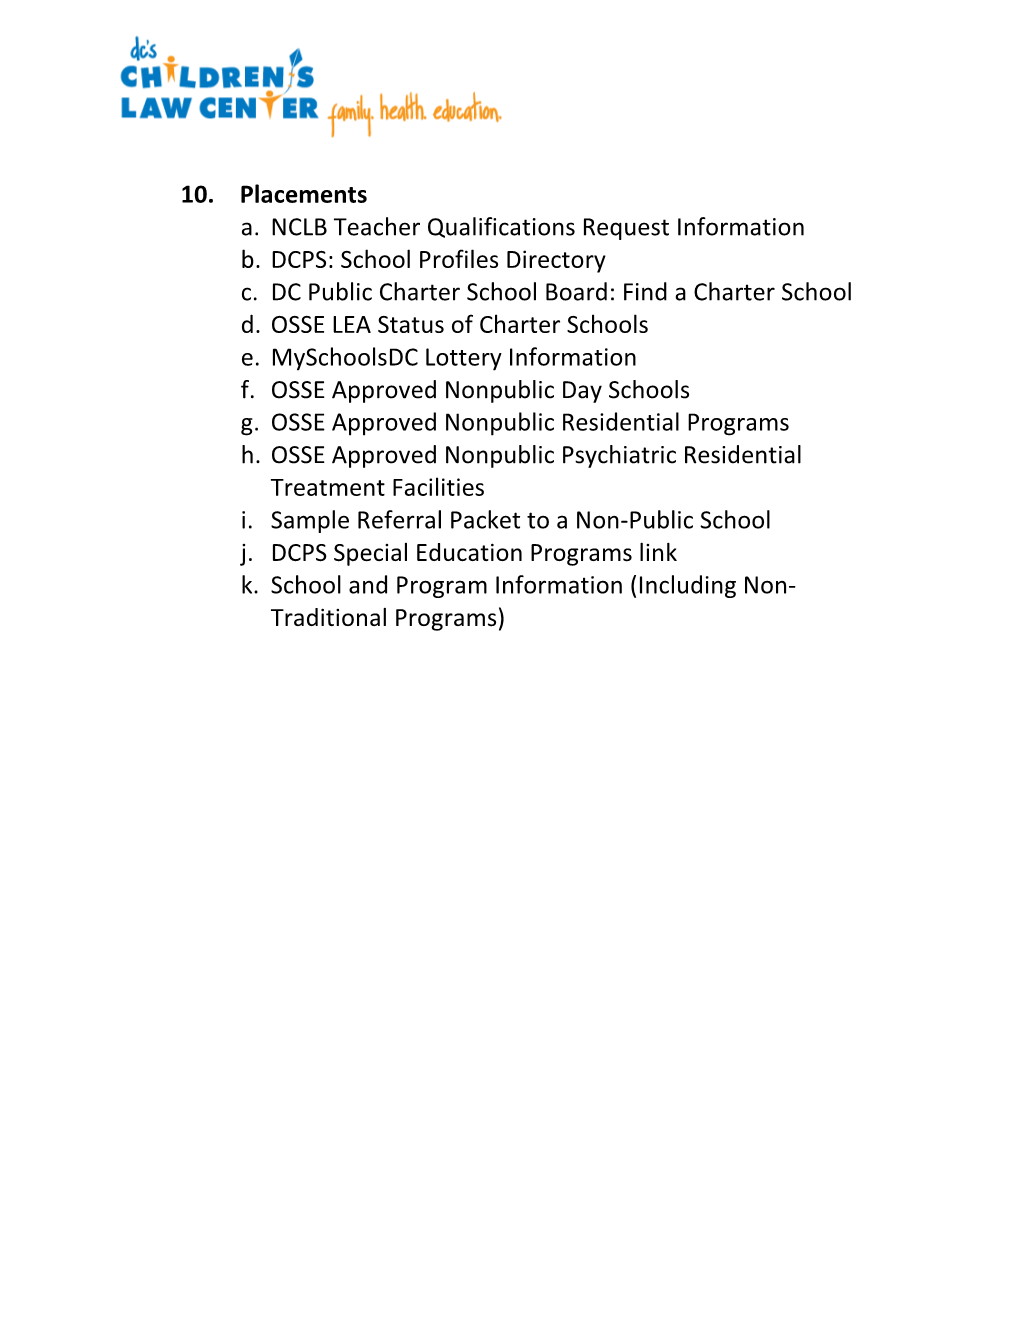 School Profiles Directory C. DC Public Charter School Board: Find a Charter School D